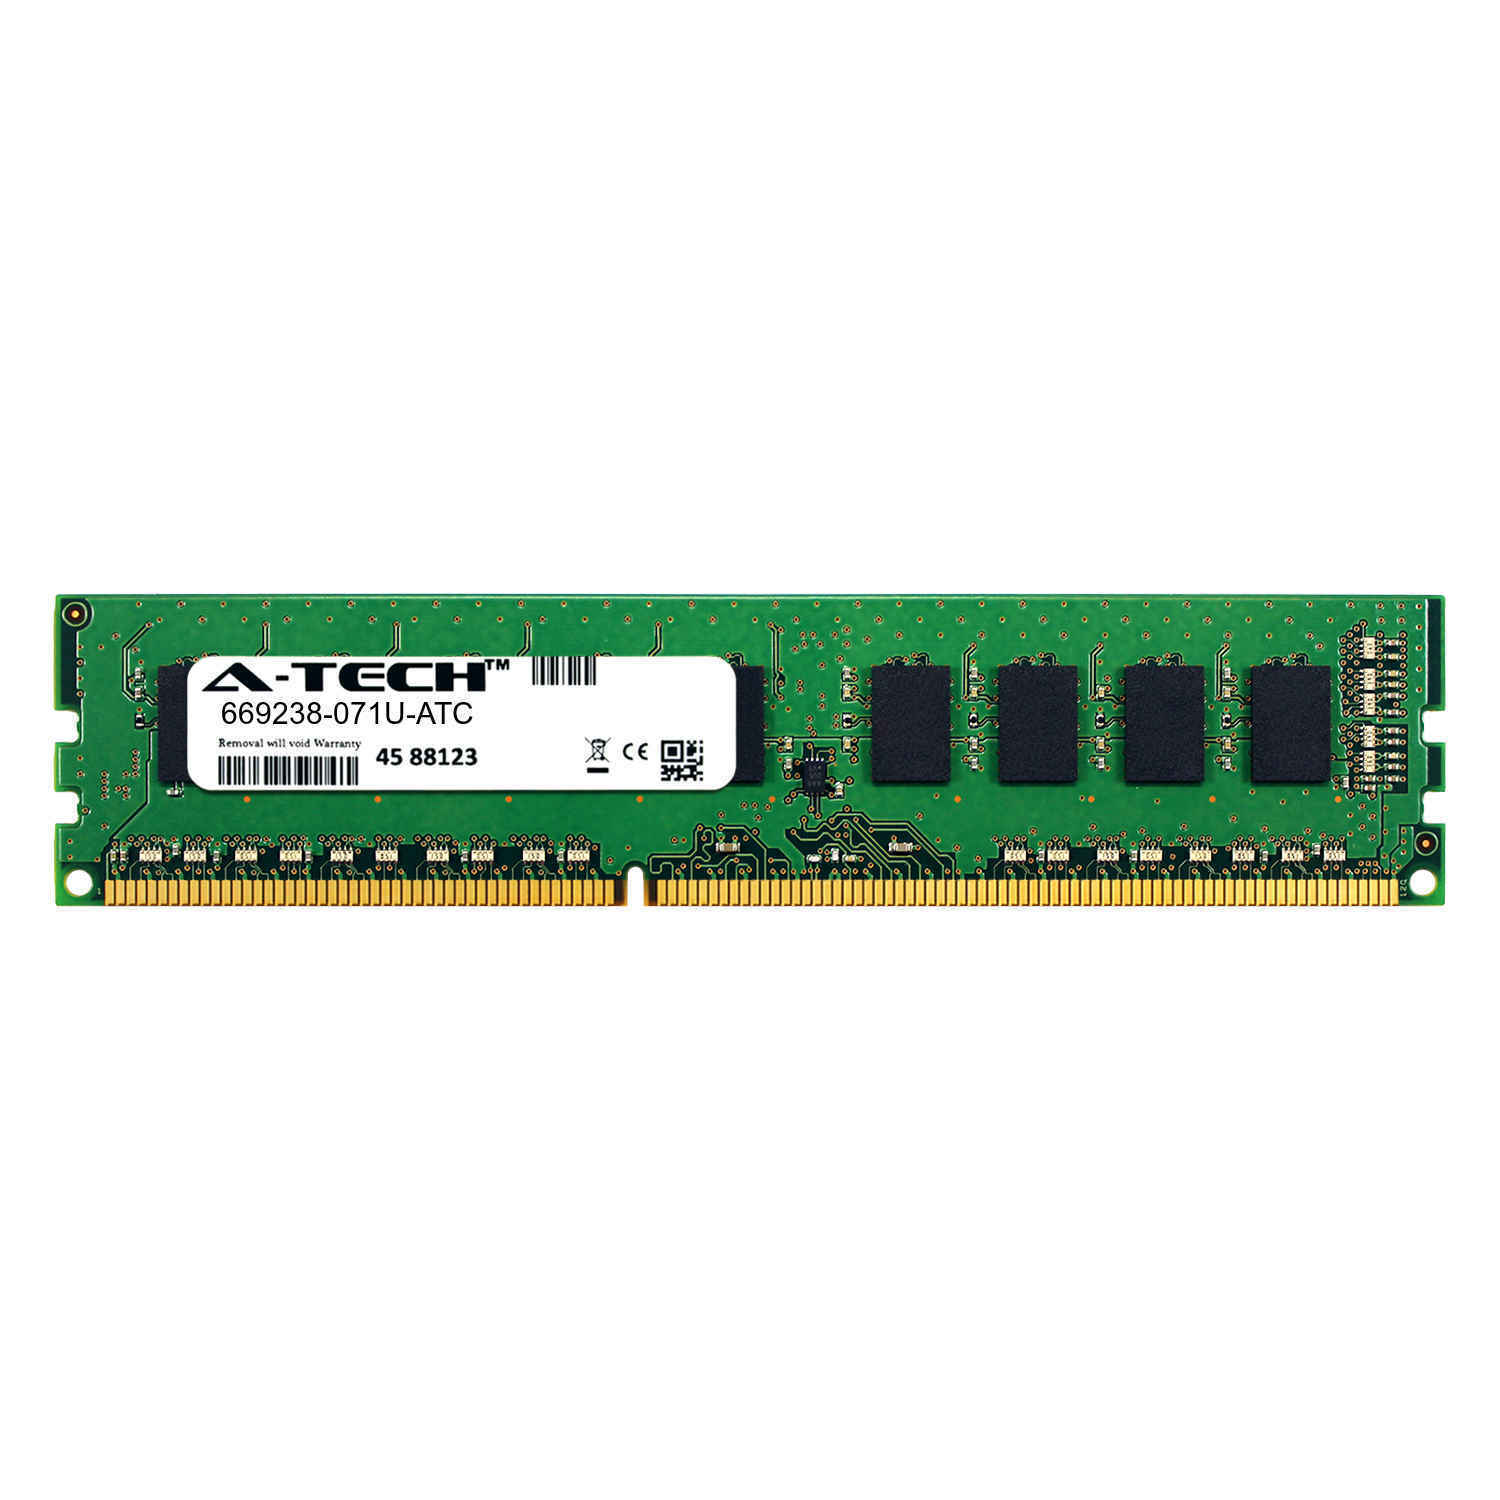 4GB DDR3 PC3-12800E ECC UDIMM (HP 669238-071U Equivalent) Server Memory RAM